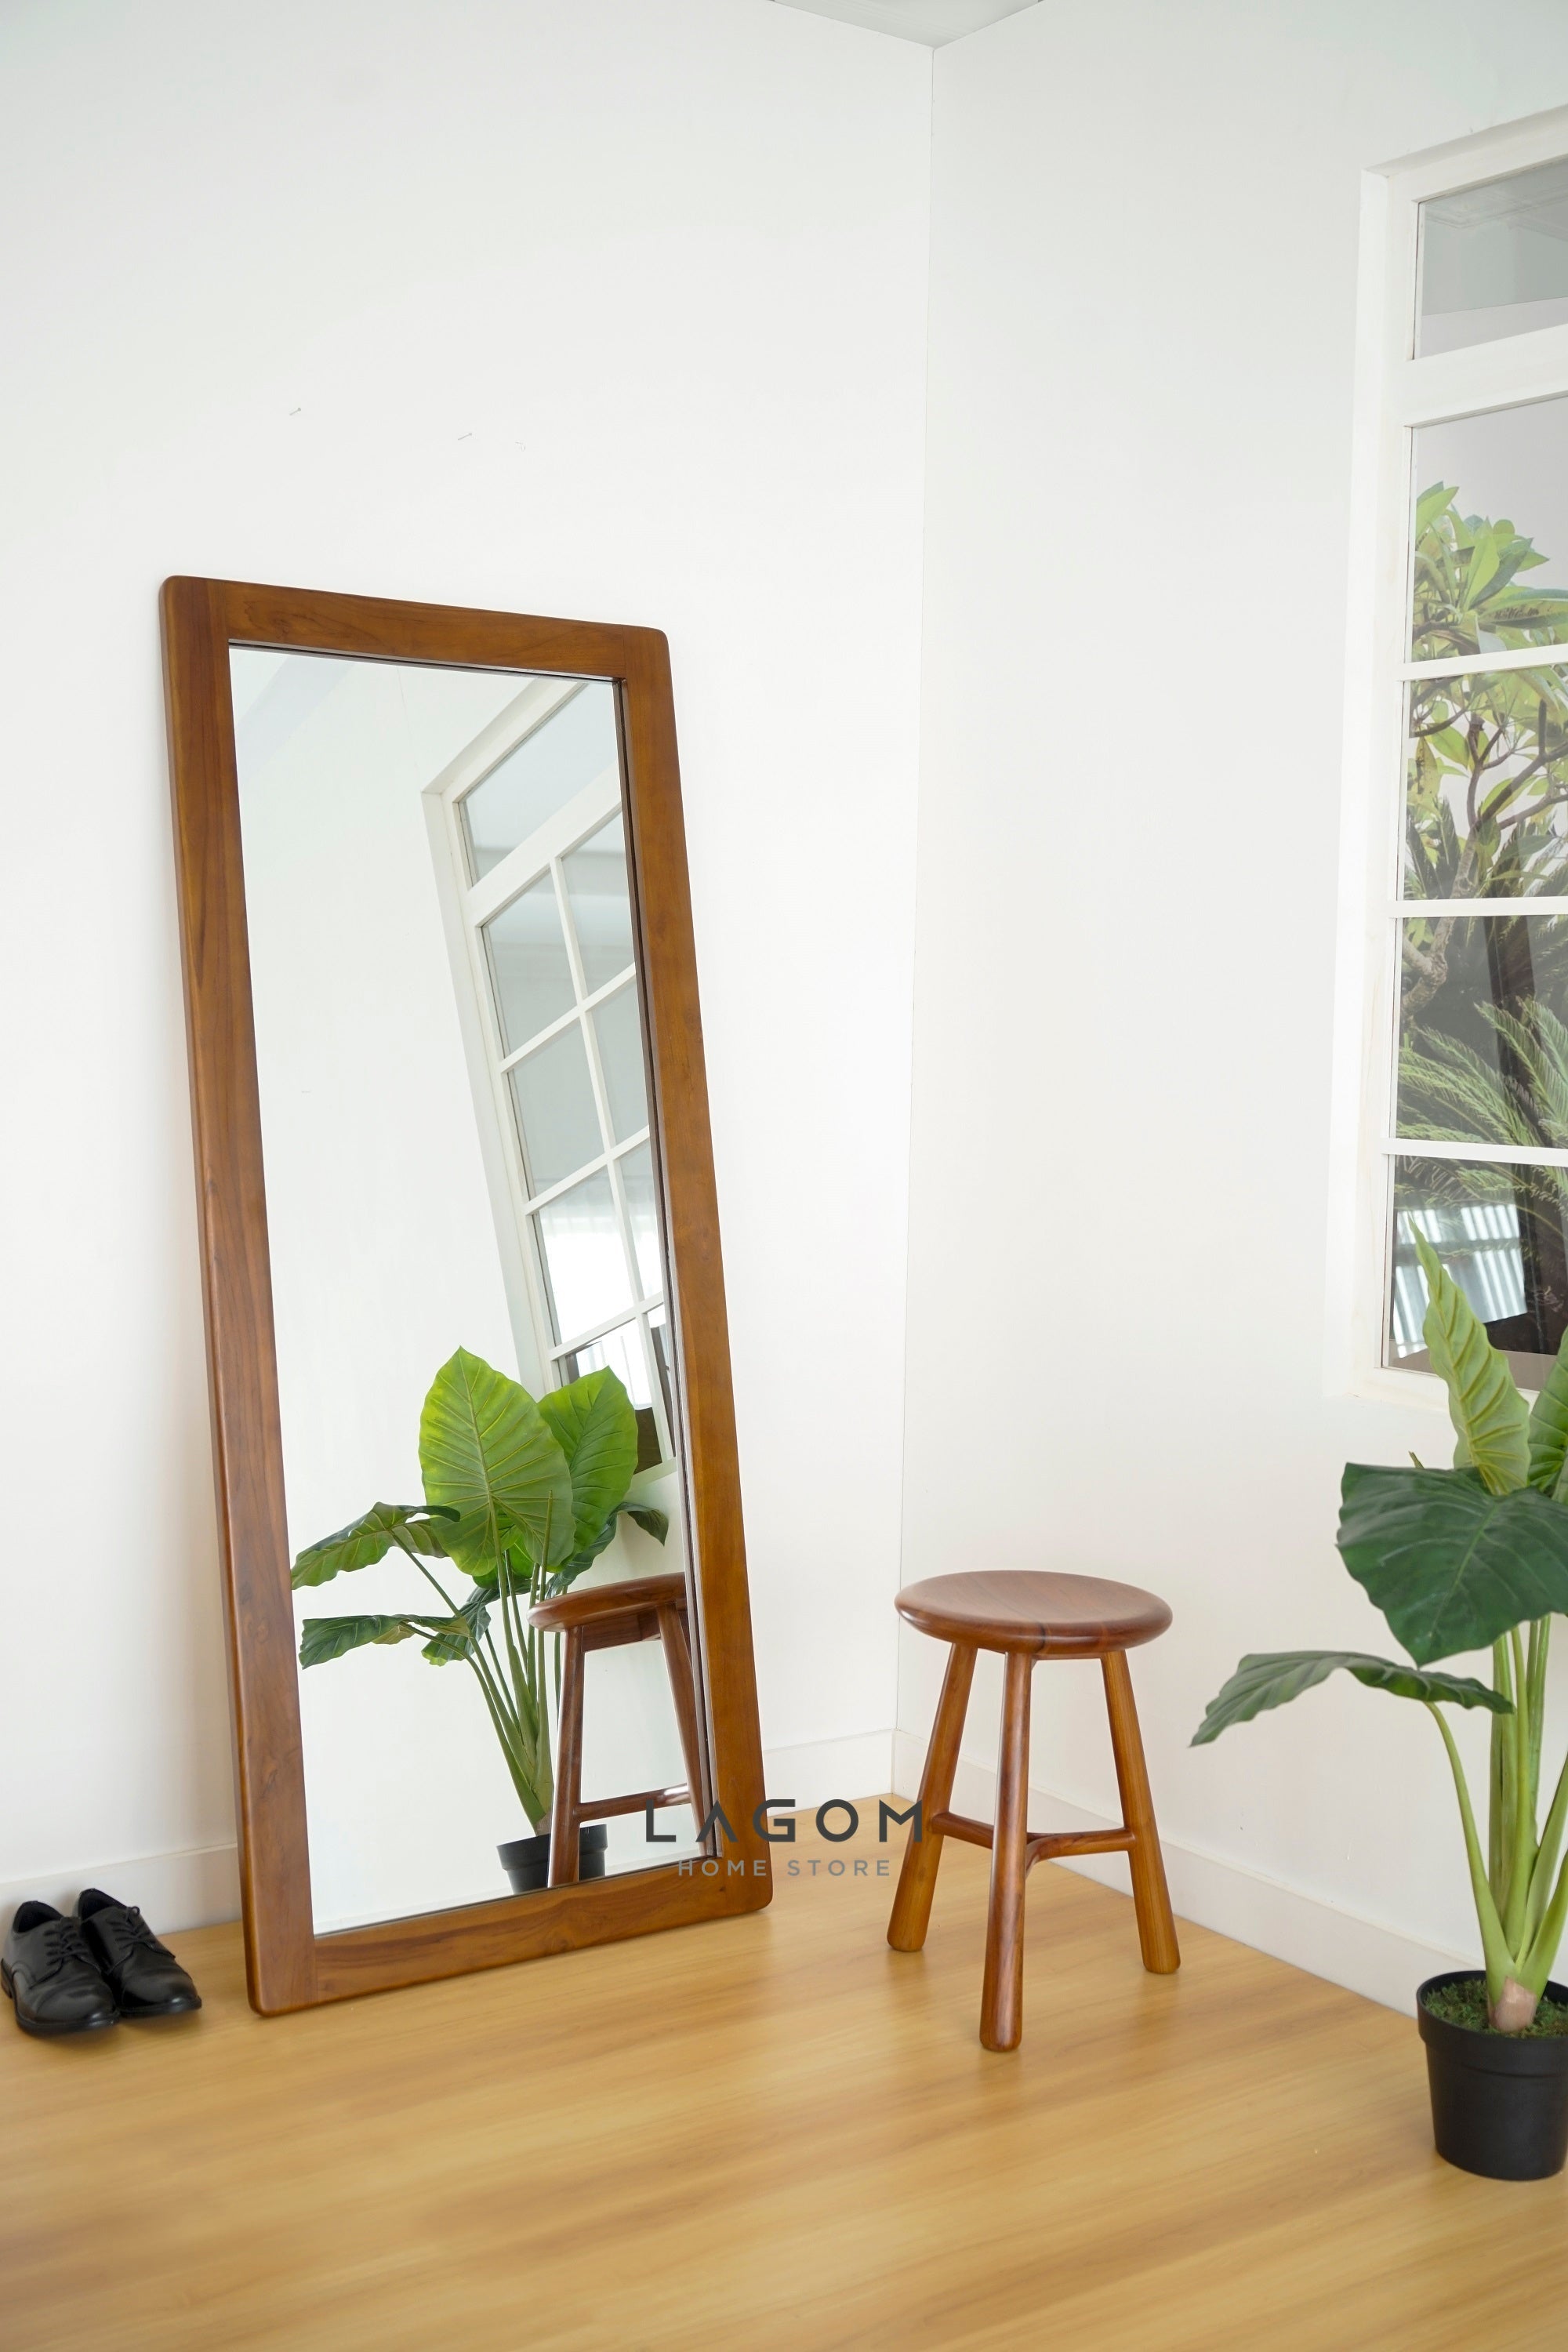 Standing Mirror dari Kayu Jati Solid - Tinggi 183 cm Mirror Lagom Home Store Jati Furnitur Teak Furniture Jakarta